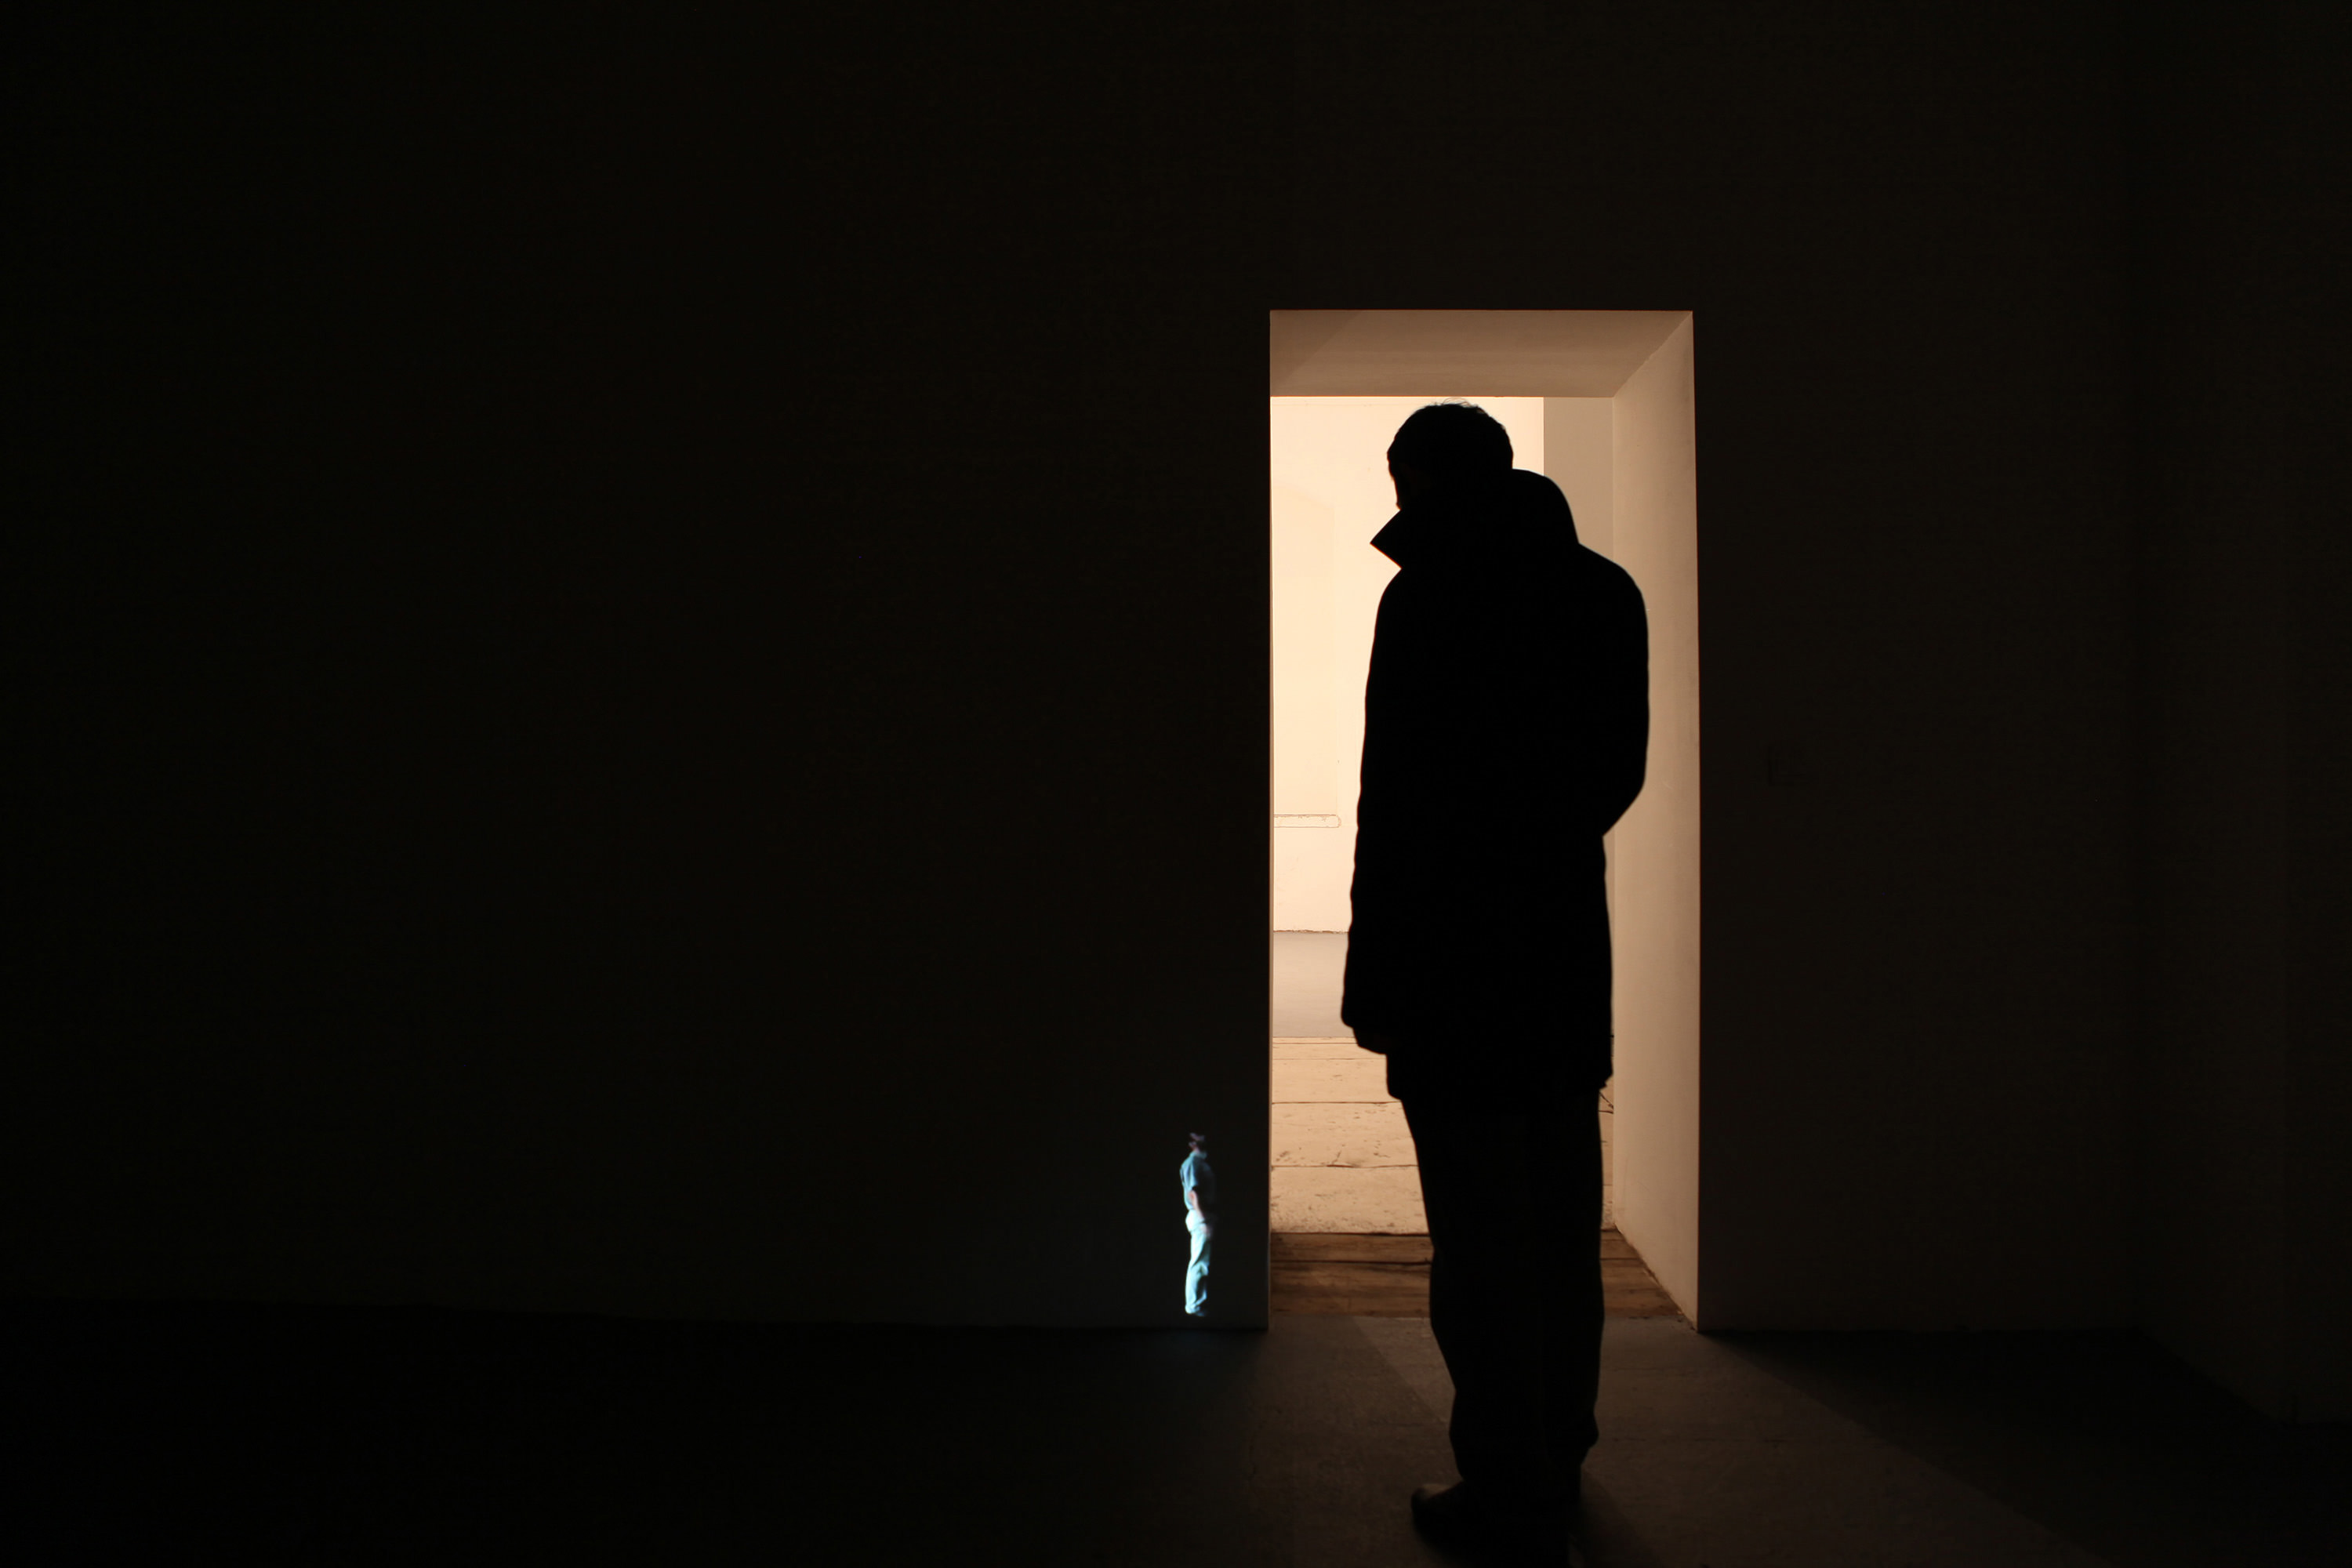 Goran Škofić: PUSHING, 2014, video installation at the corner of the wall, 02’35’’, loop, Size: 35 cm high
Foto: Goran Škofić; Abdruck honorarfrei bei Namensnennung
